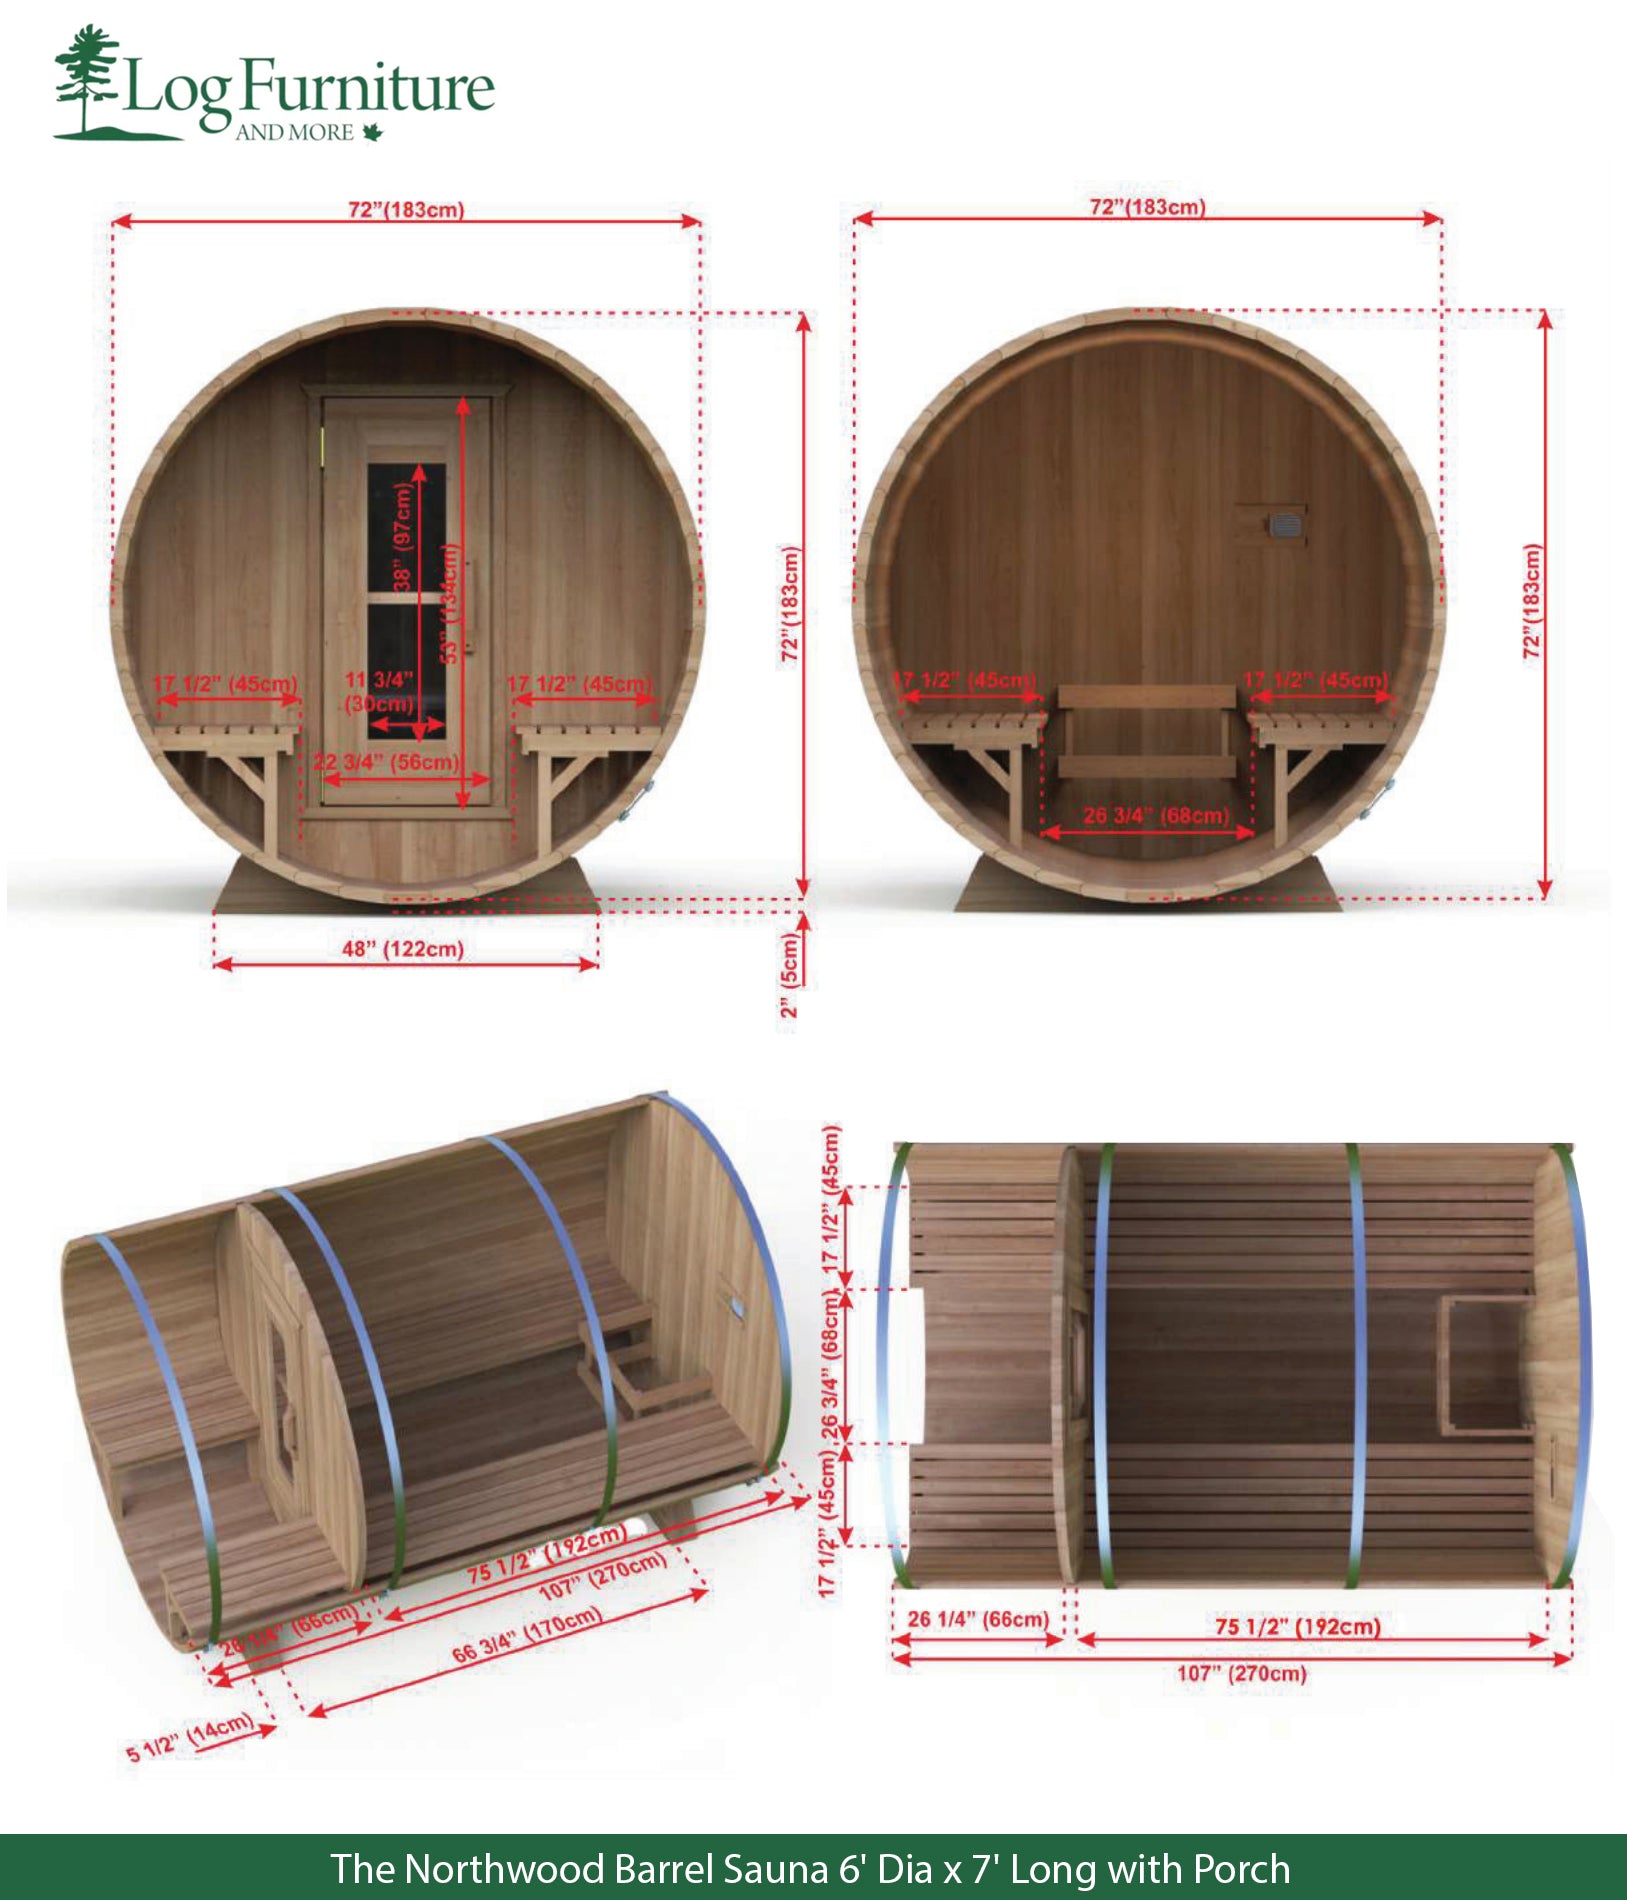 The Northwood Barrel Sauna 6' Dia x 7' Long with Porch